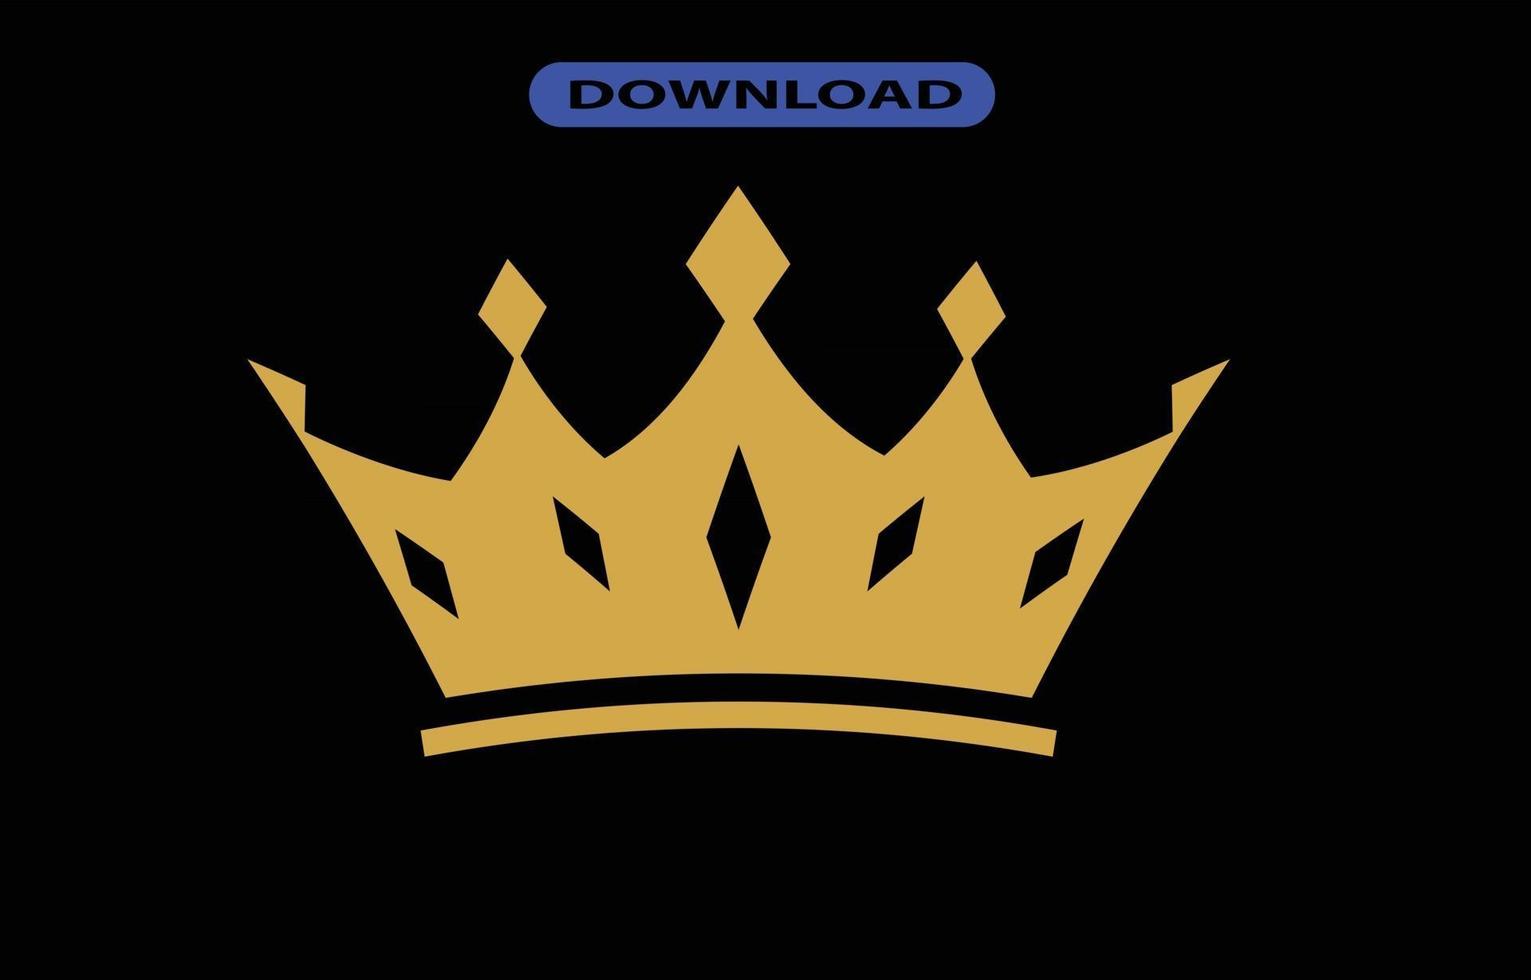 crown icon or logo high resolution vector